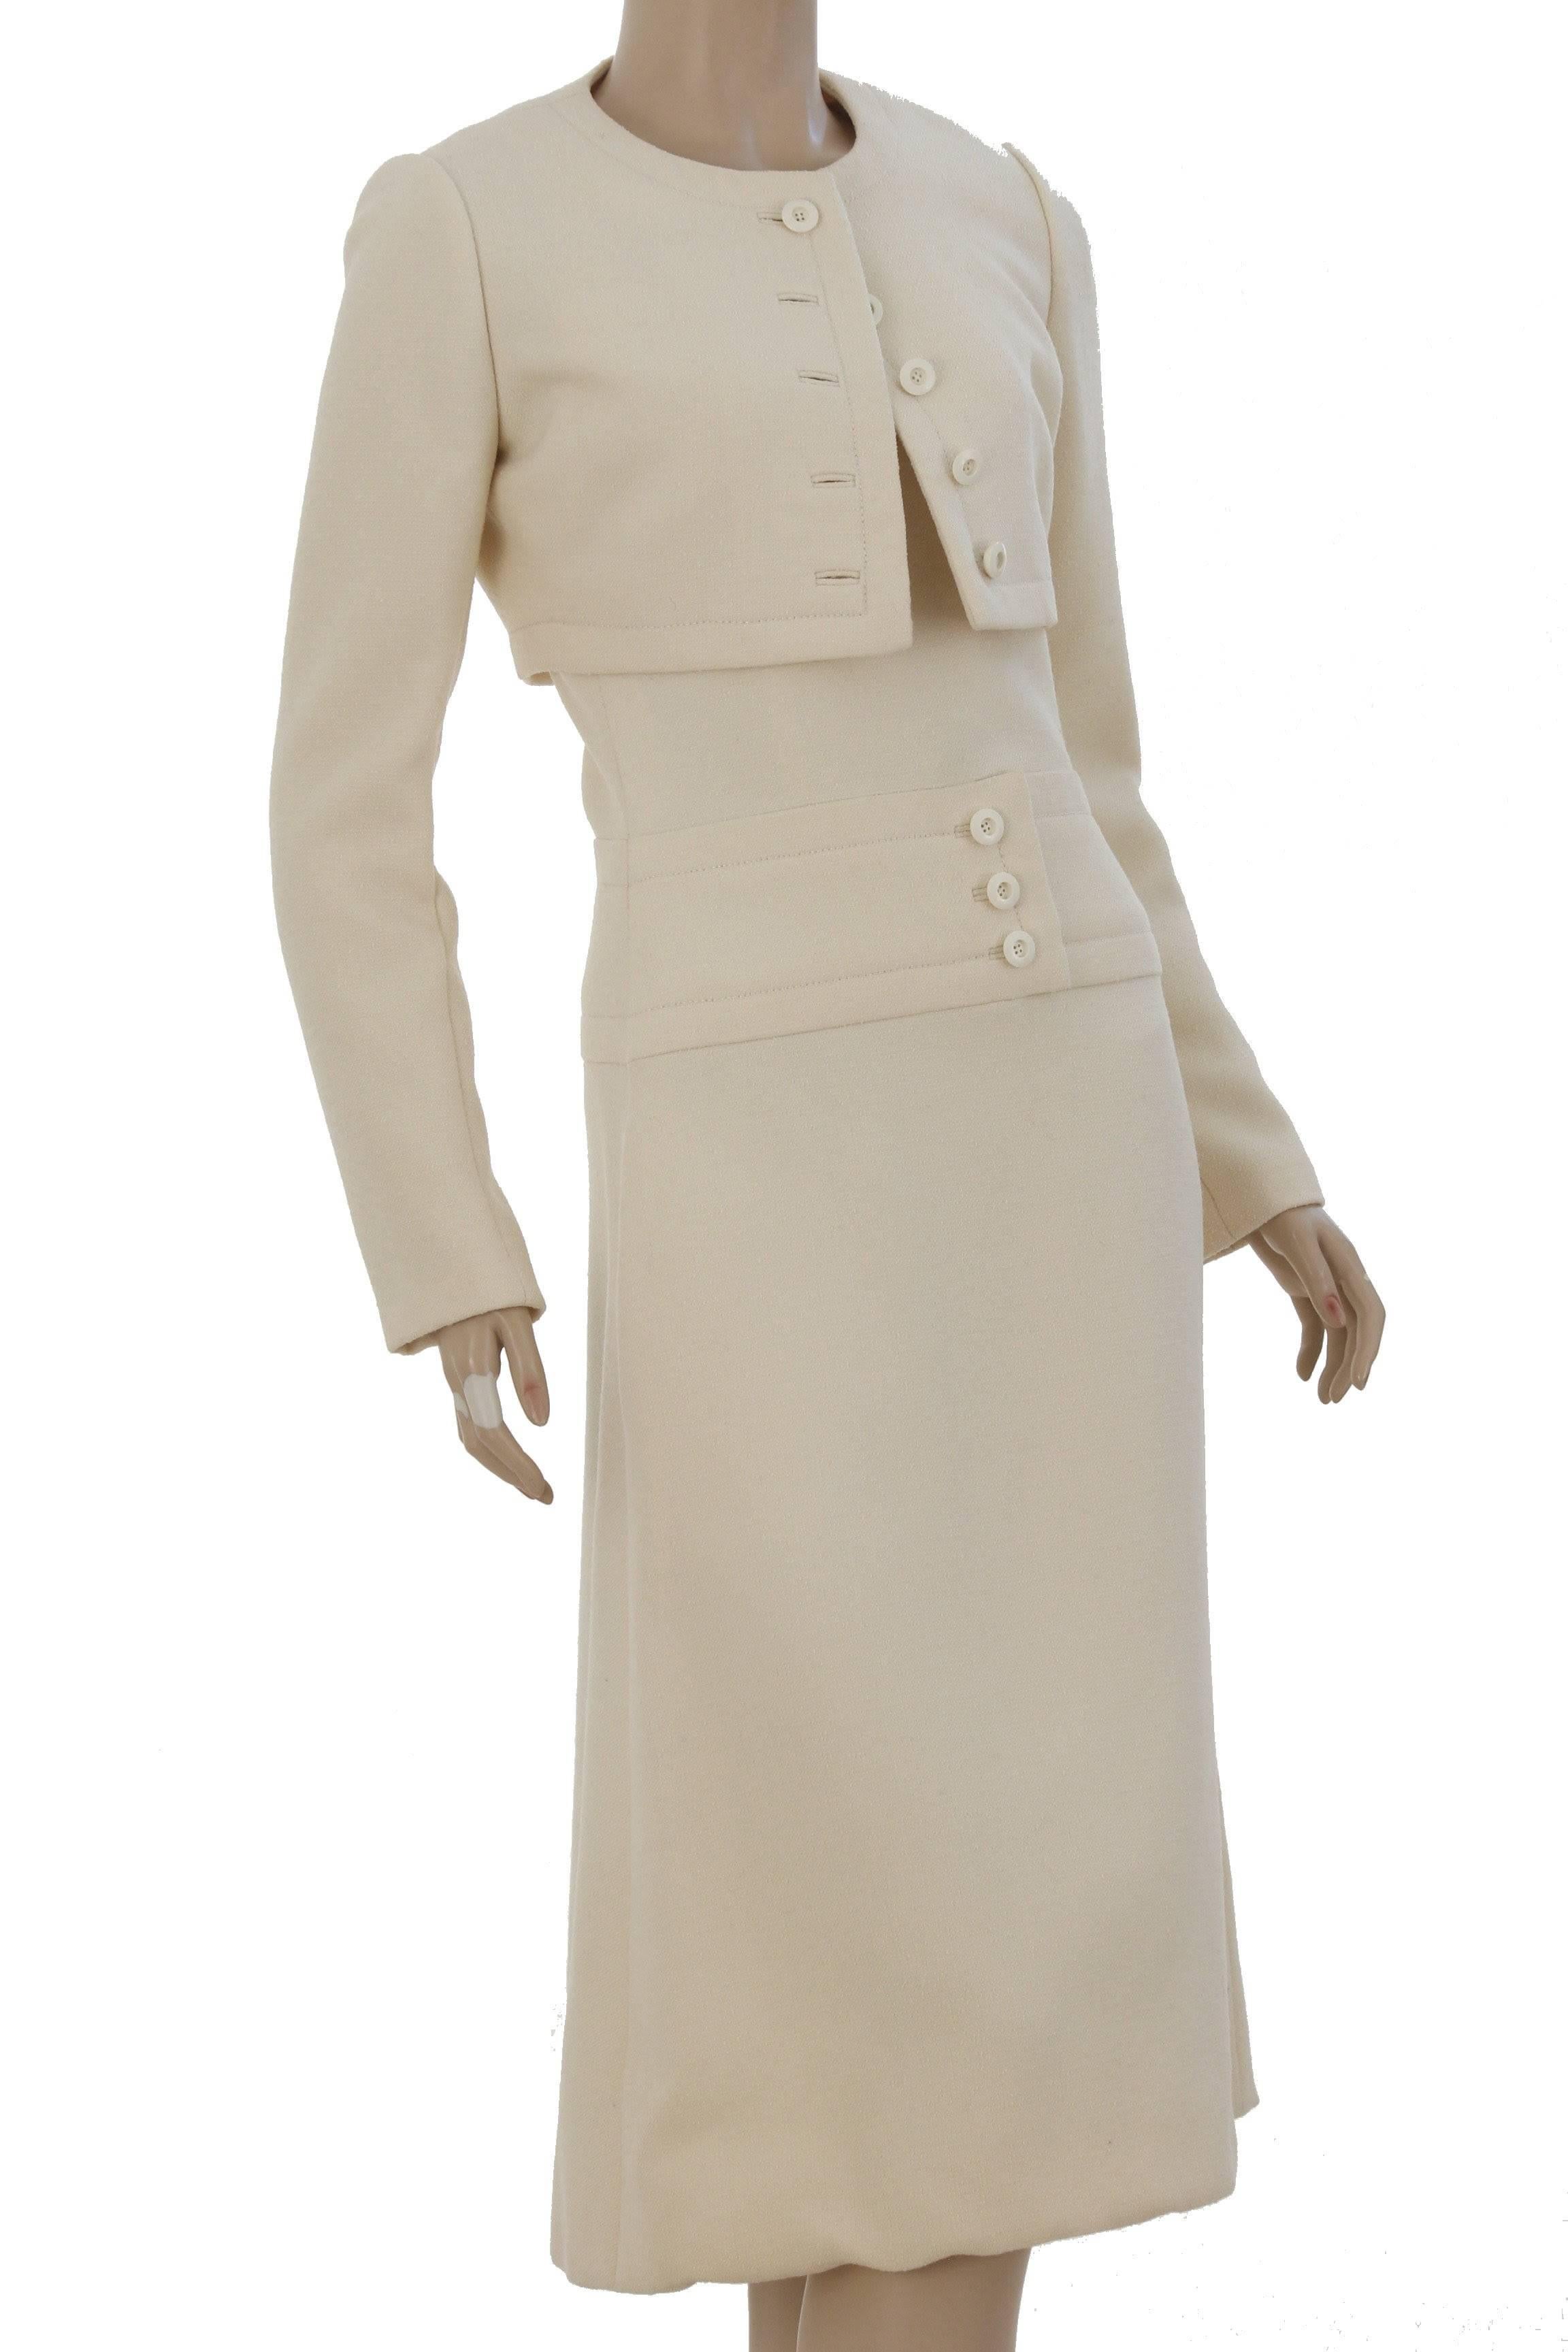 Women's Ultra Rare Galanos Cream Wool Dress with Cropped Jacket Ensemble 2pc Set 60s S